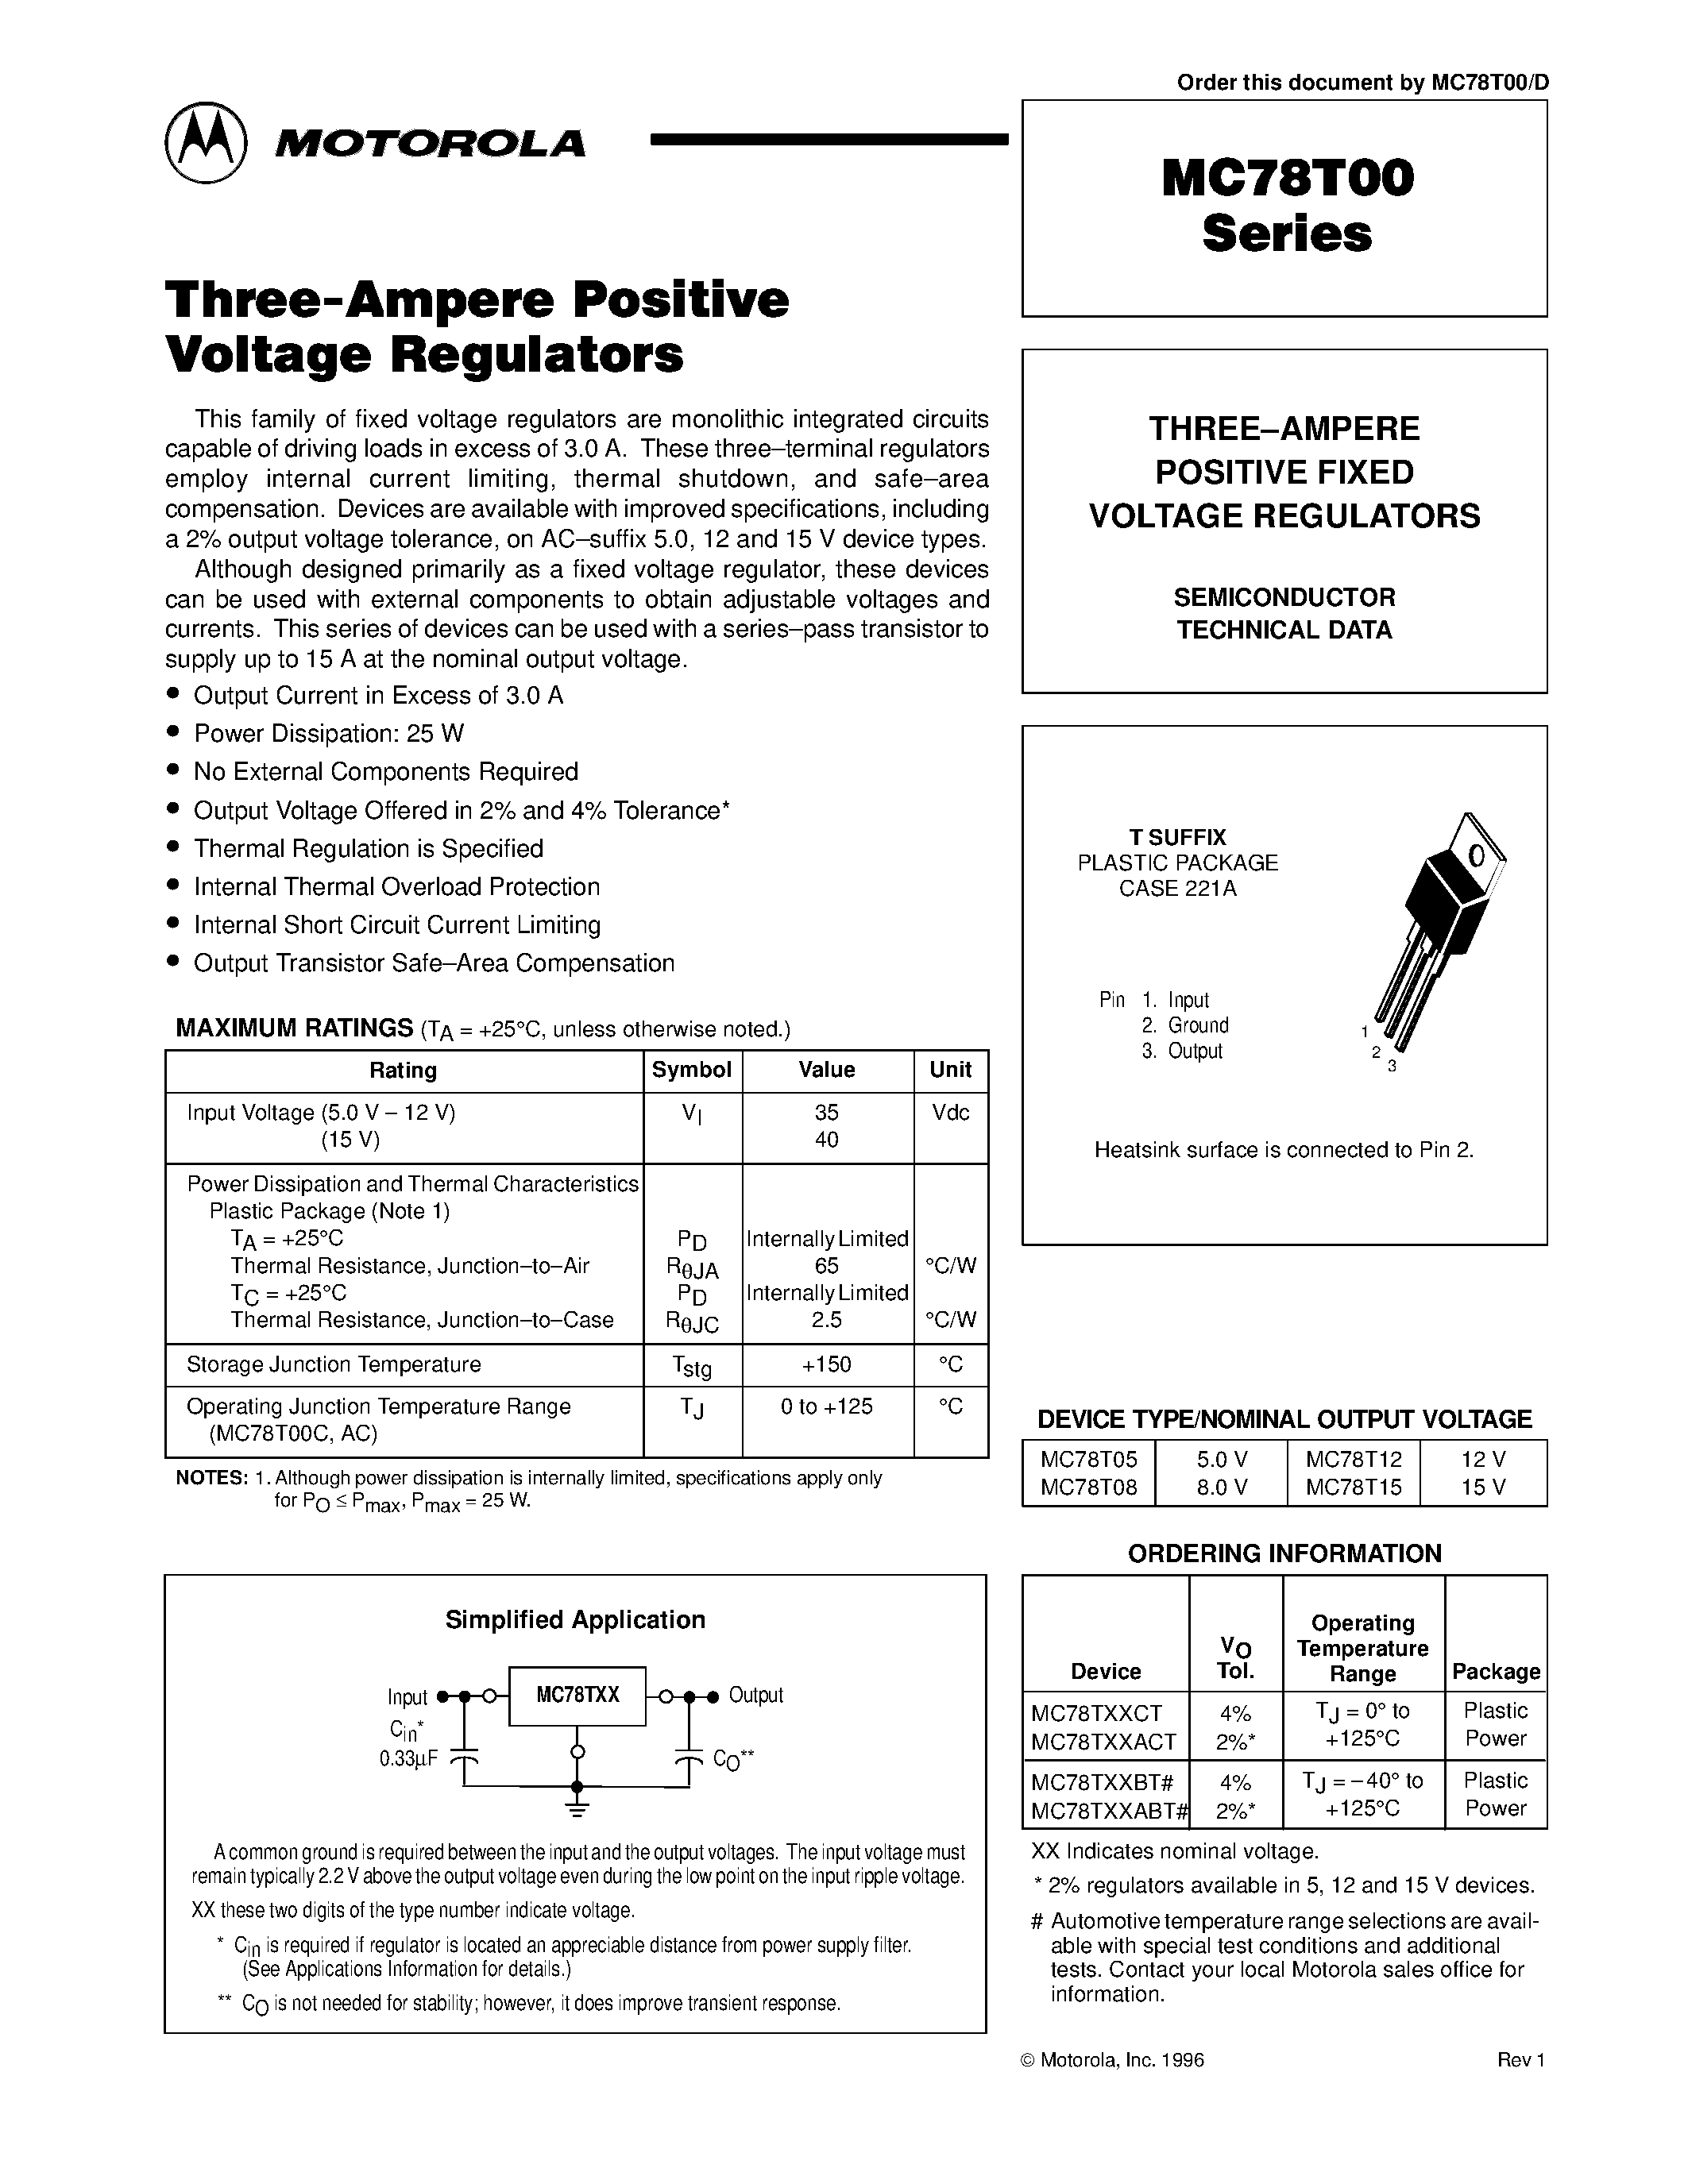 Даташит MC78T05AC - THREE-AMPERE POSITIVE FIXED VOLTAGE REGULATORS страница 1